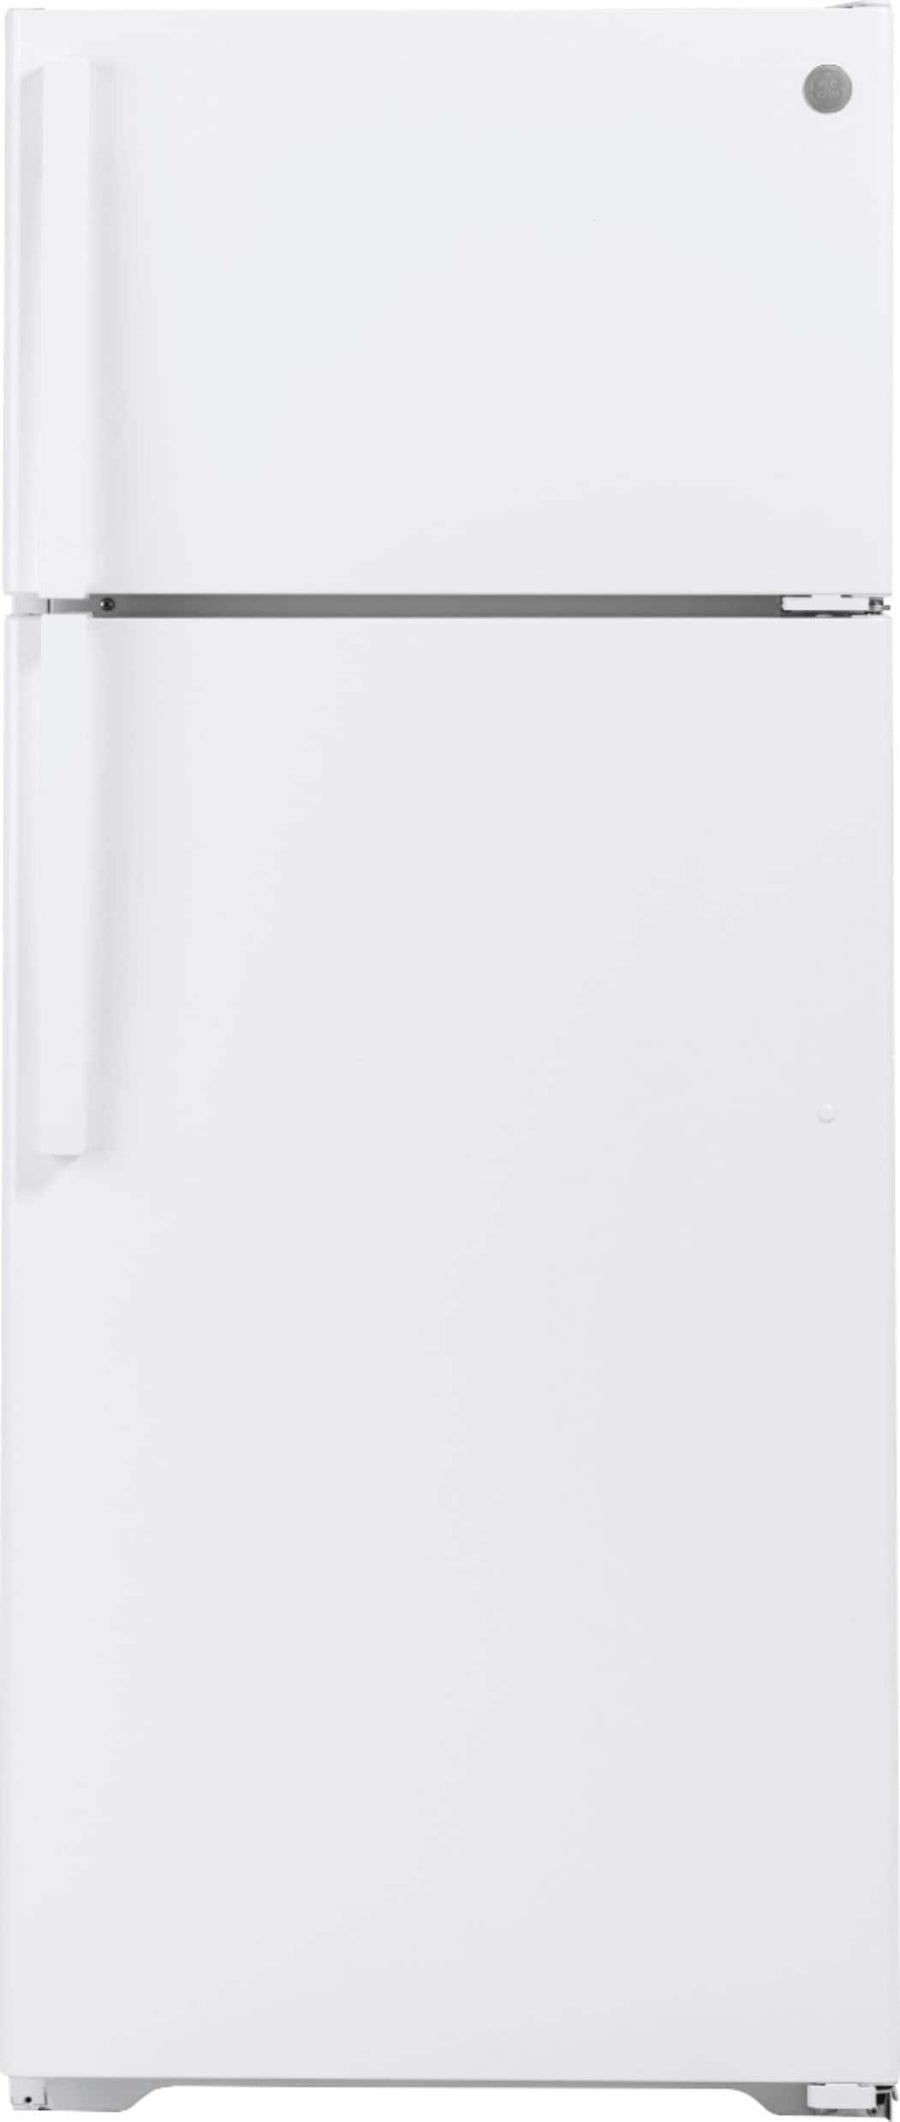 GE - 17.5 Cu. Ft. Top-Freezer Refrigerator - White_0